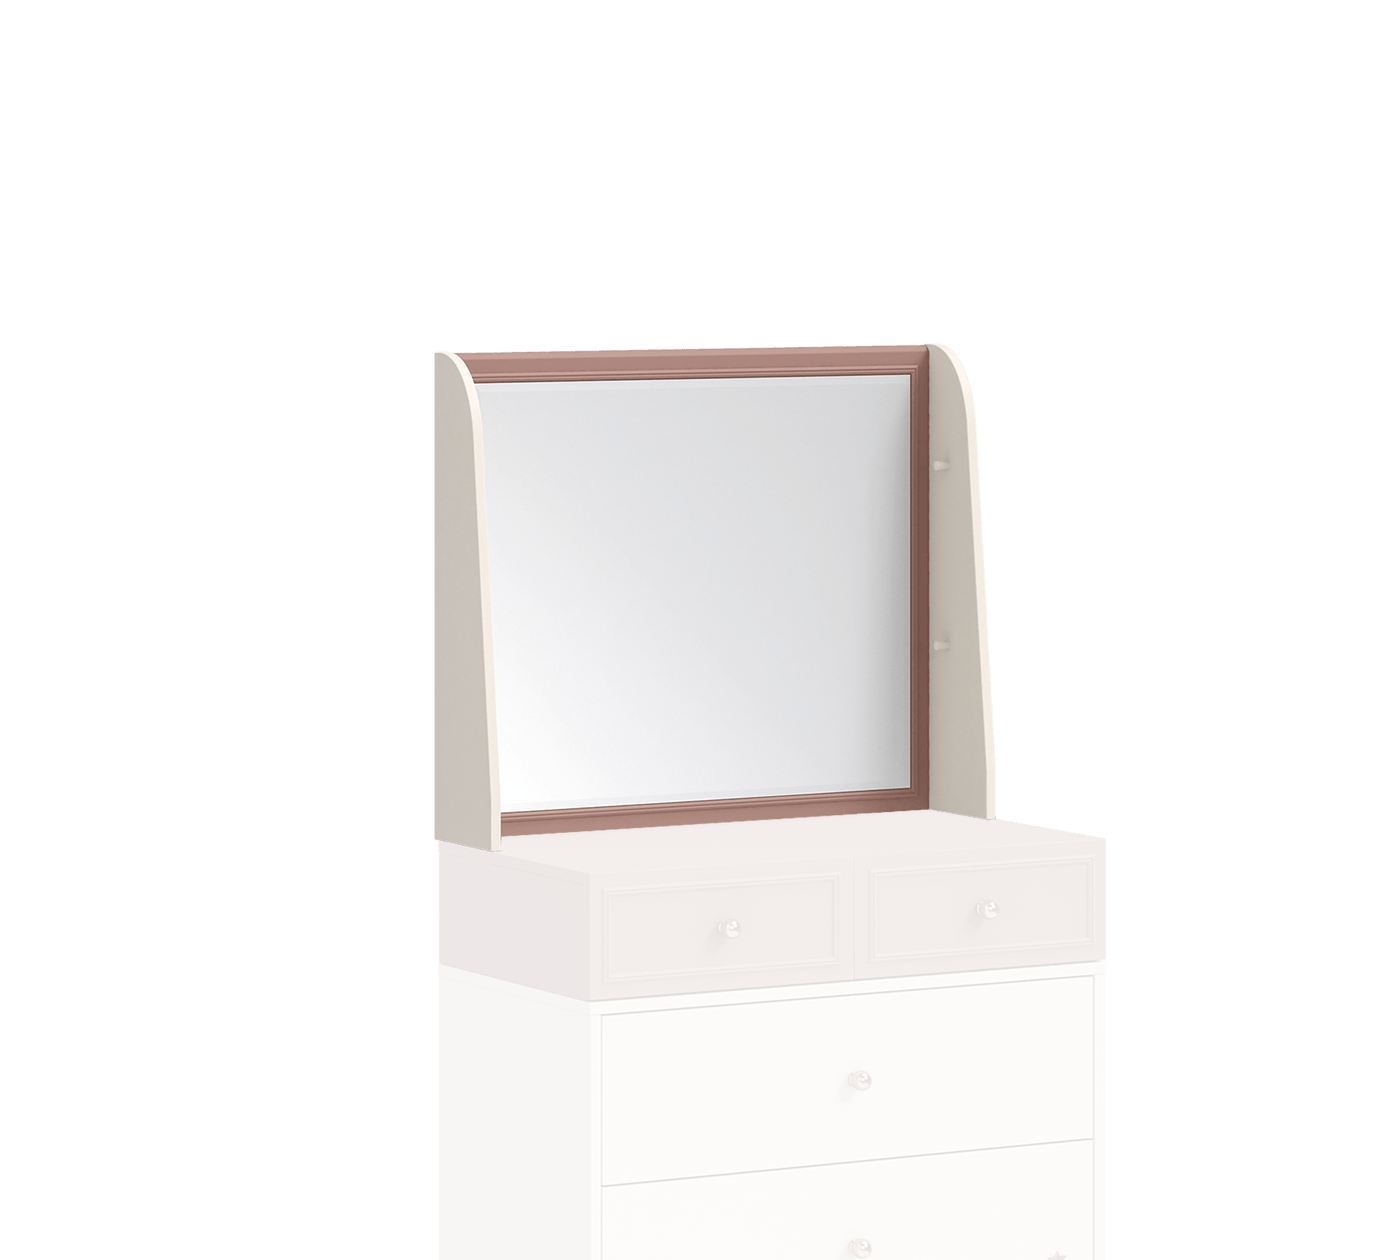 Elegance Dresser Mirror - ON ORDER ONLY